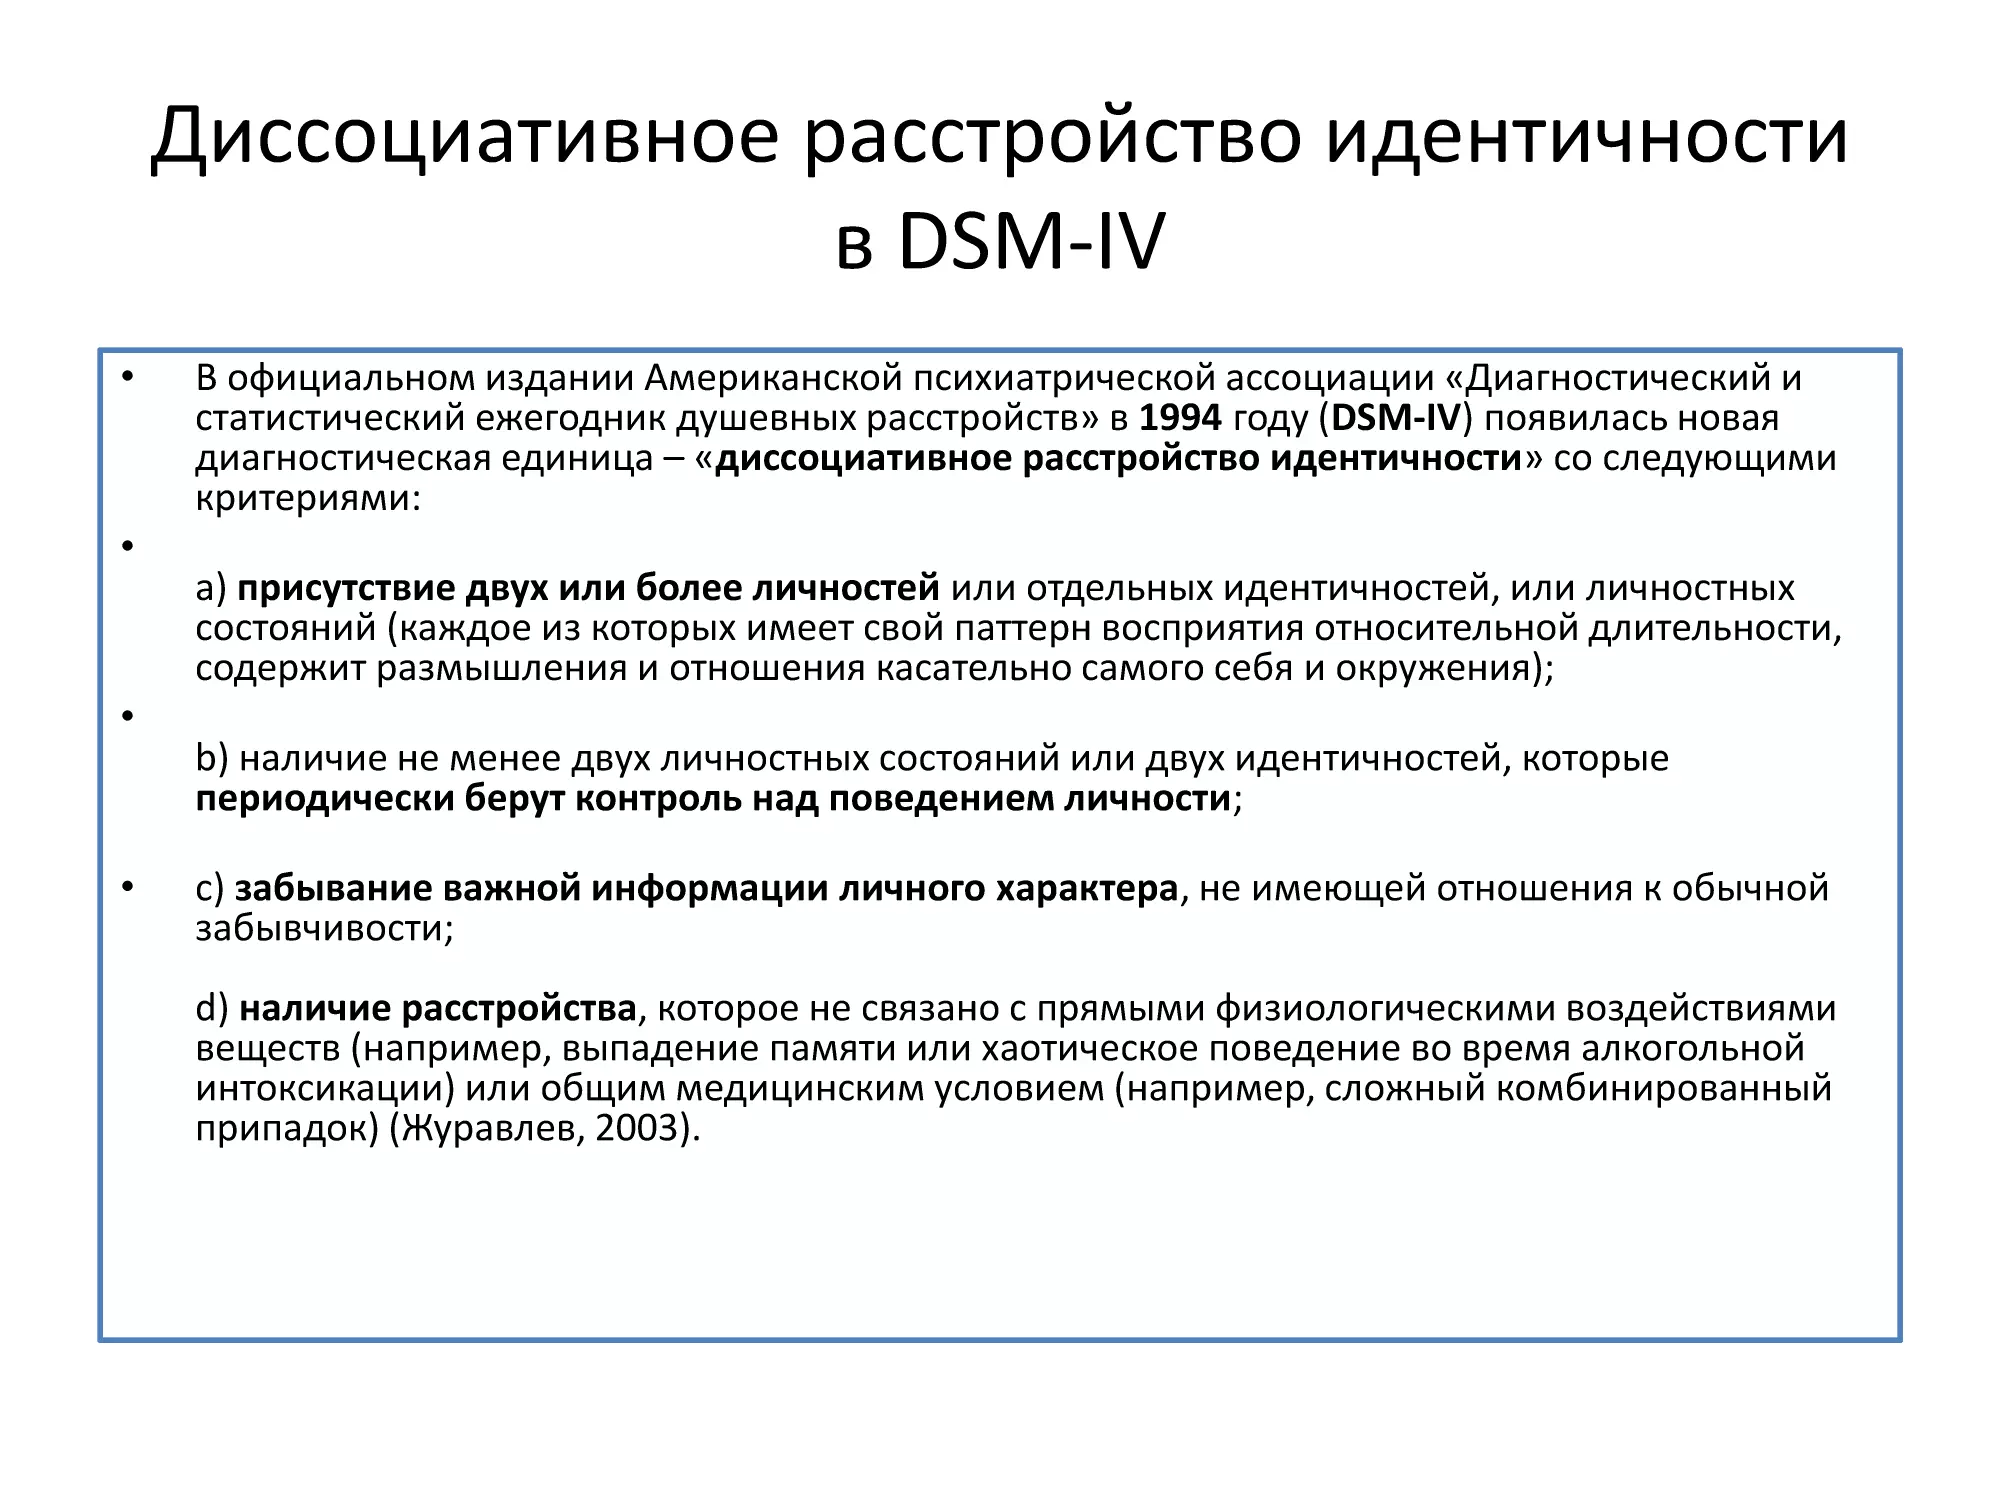 Слайд 18, Диссоциативное расстройство идентичности в DSM-IV